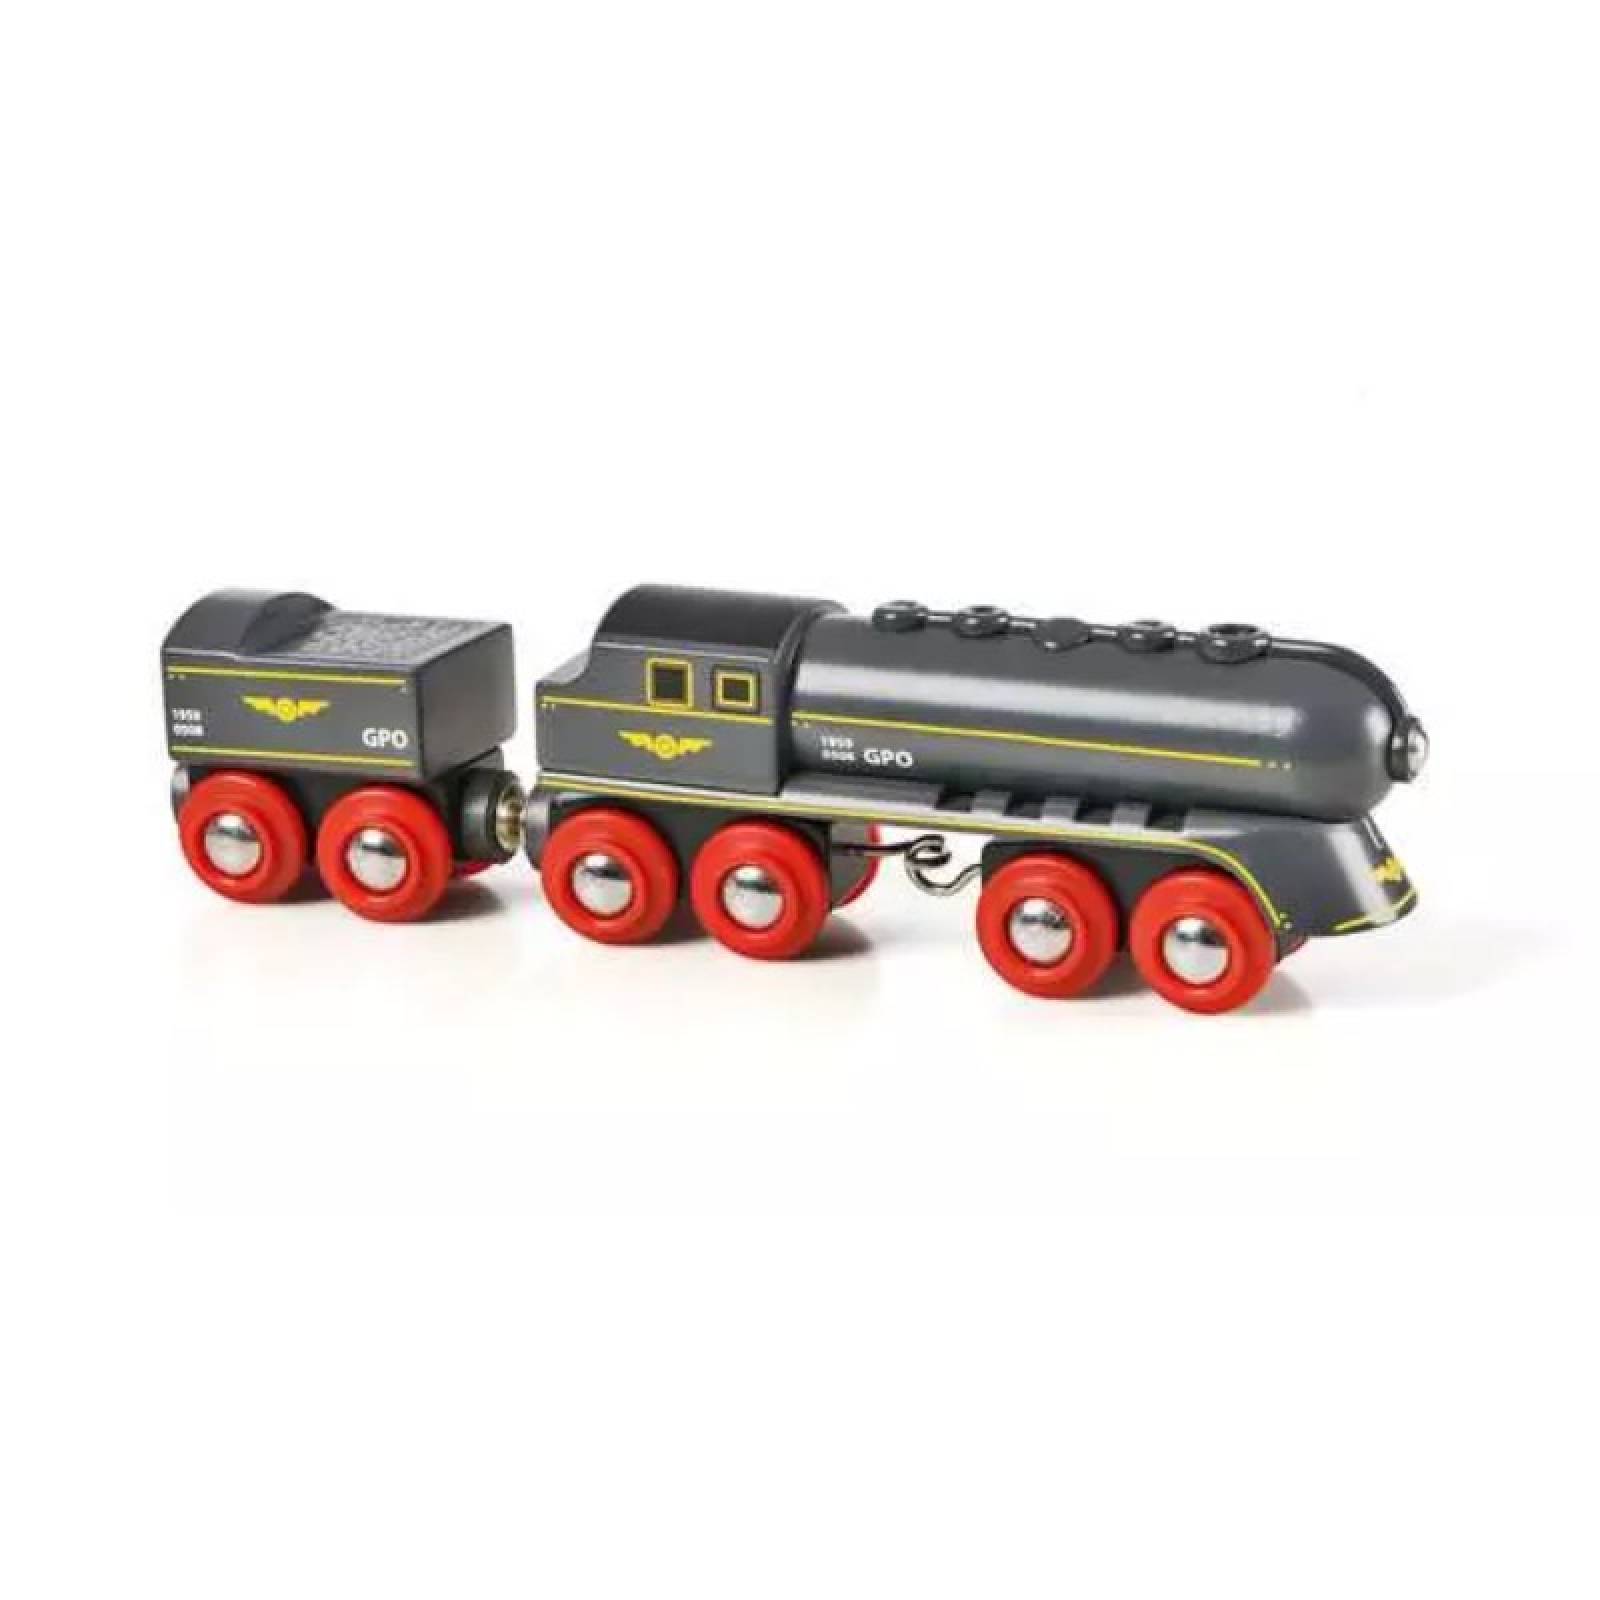 Speedy Bullet Train By Brio Wooden Railway 3+ thumbnails